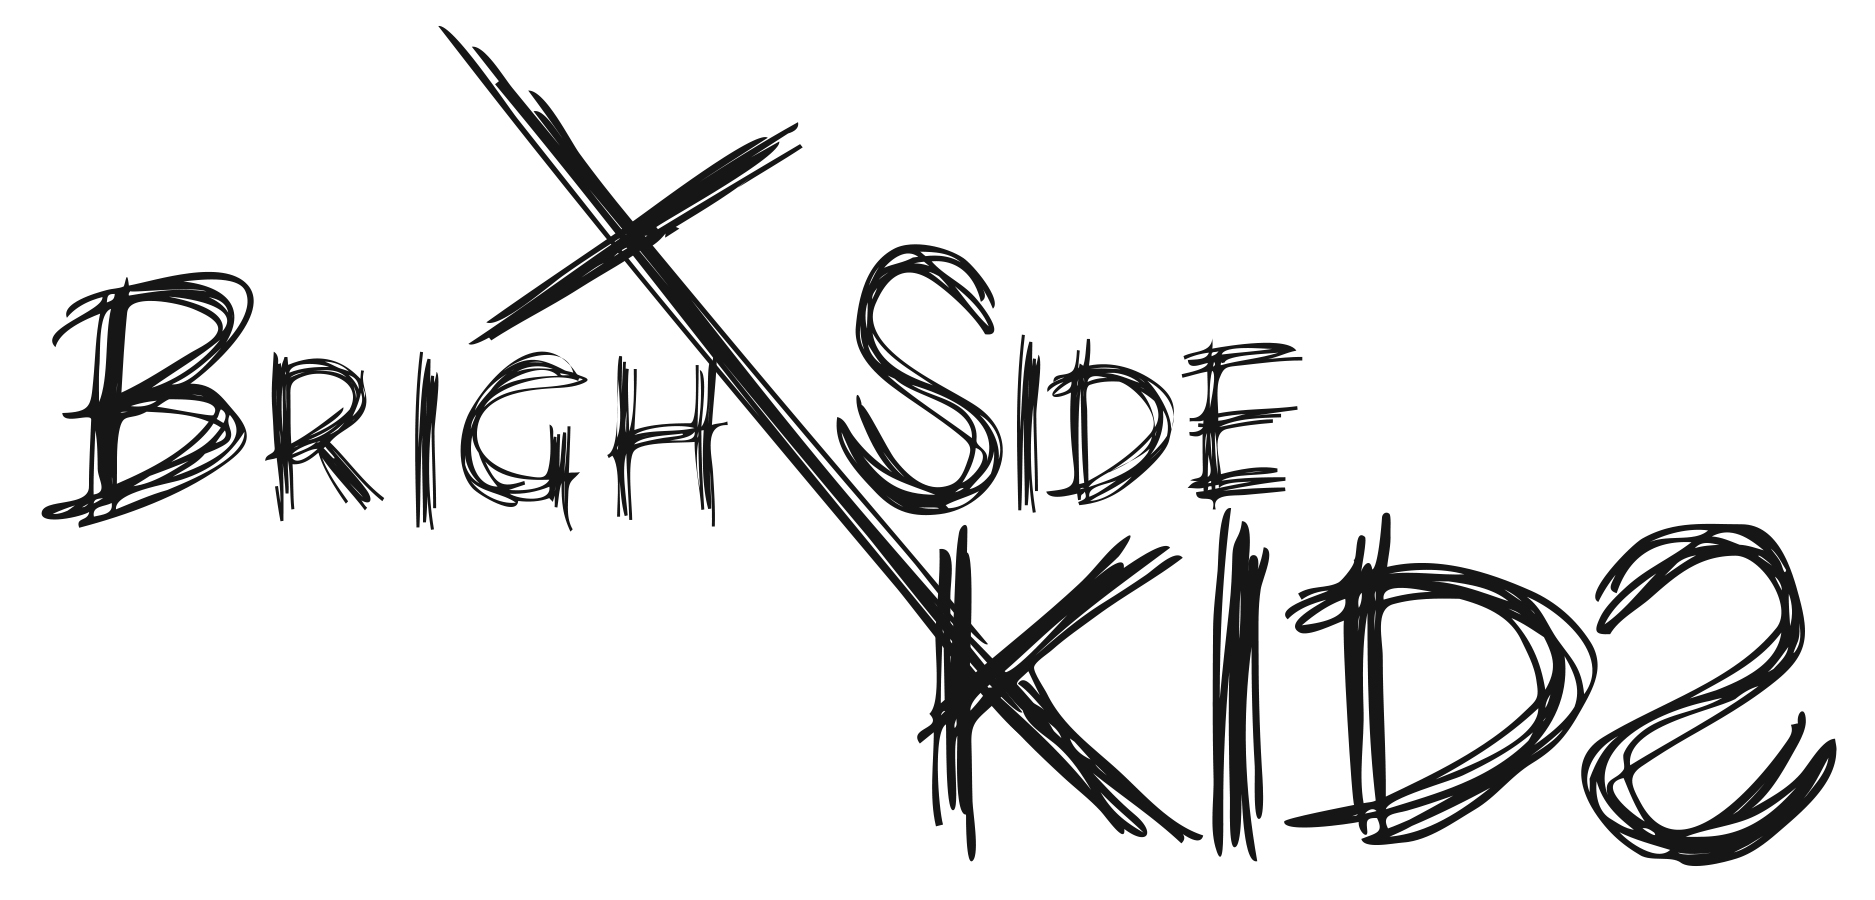 brightside kids logo final